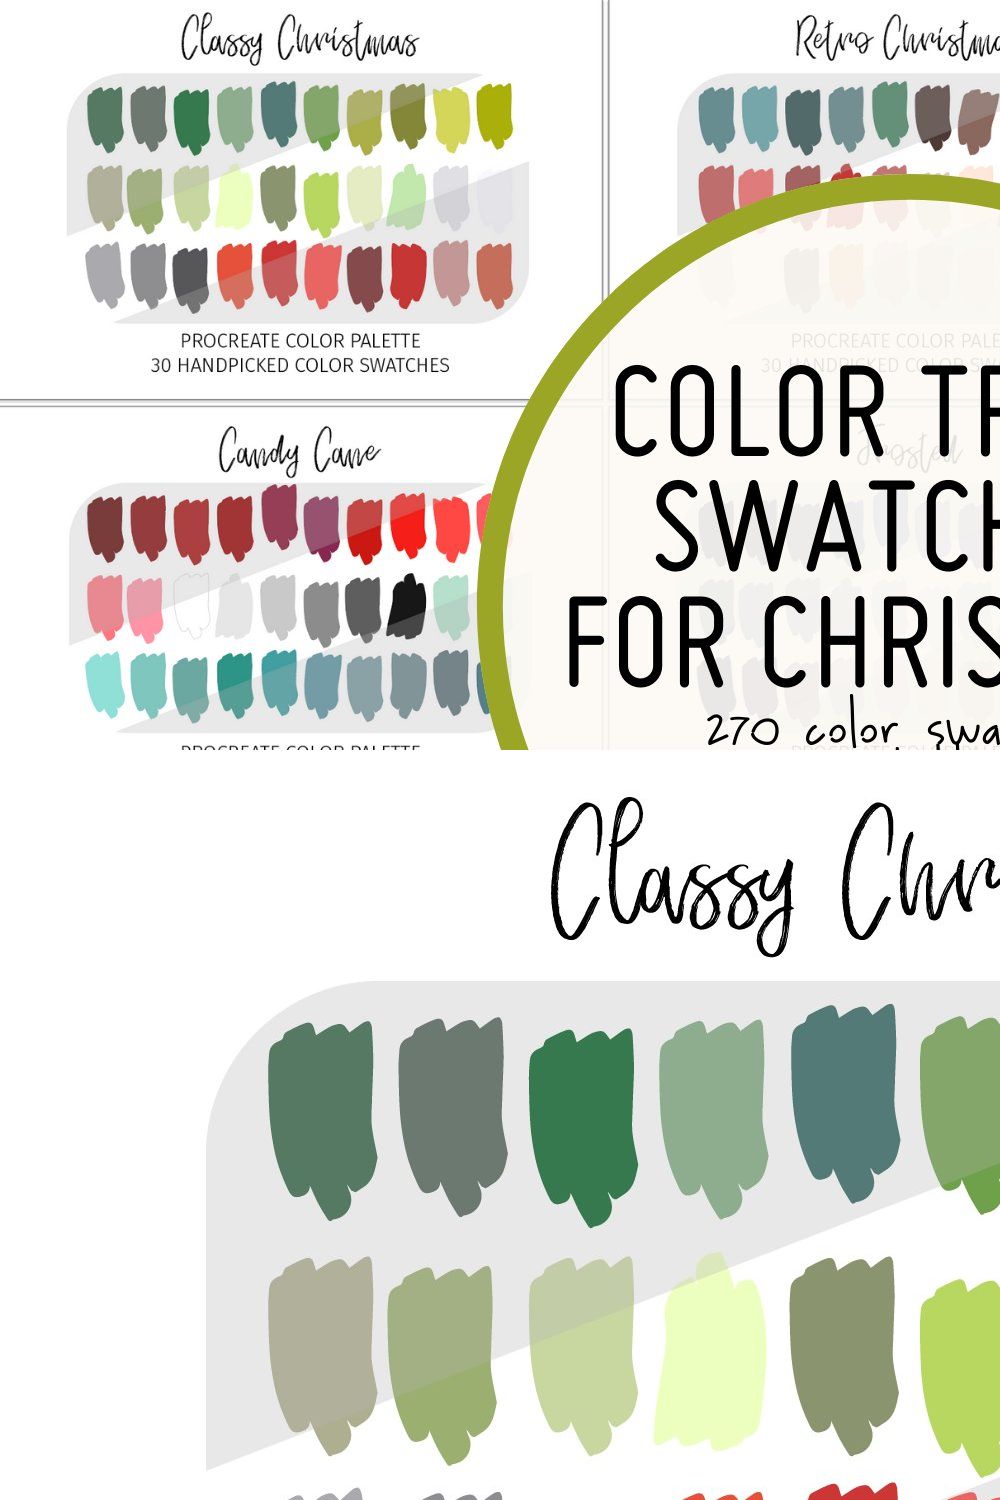 Procreate Christmas Color Palettes pinterest preview image.